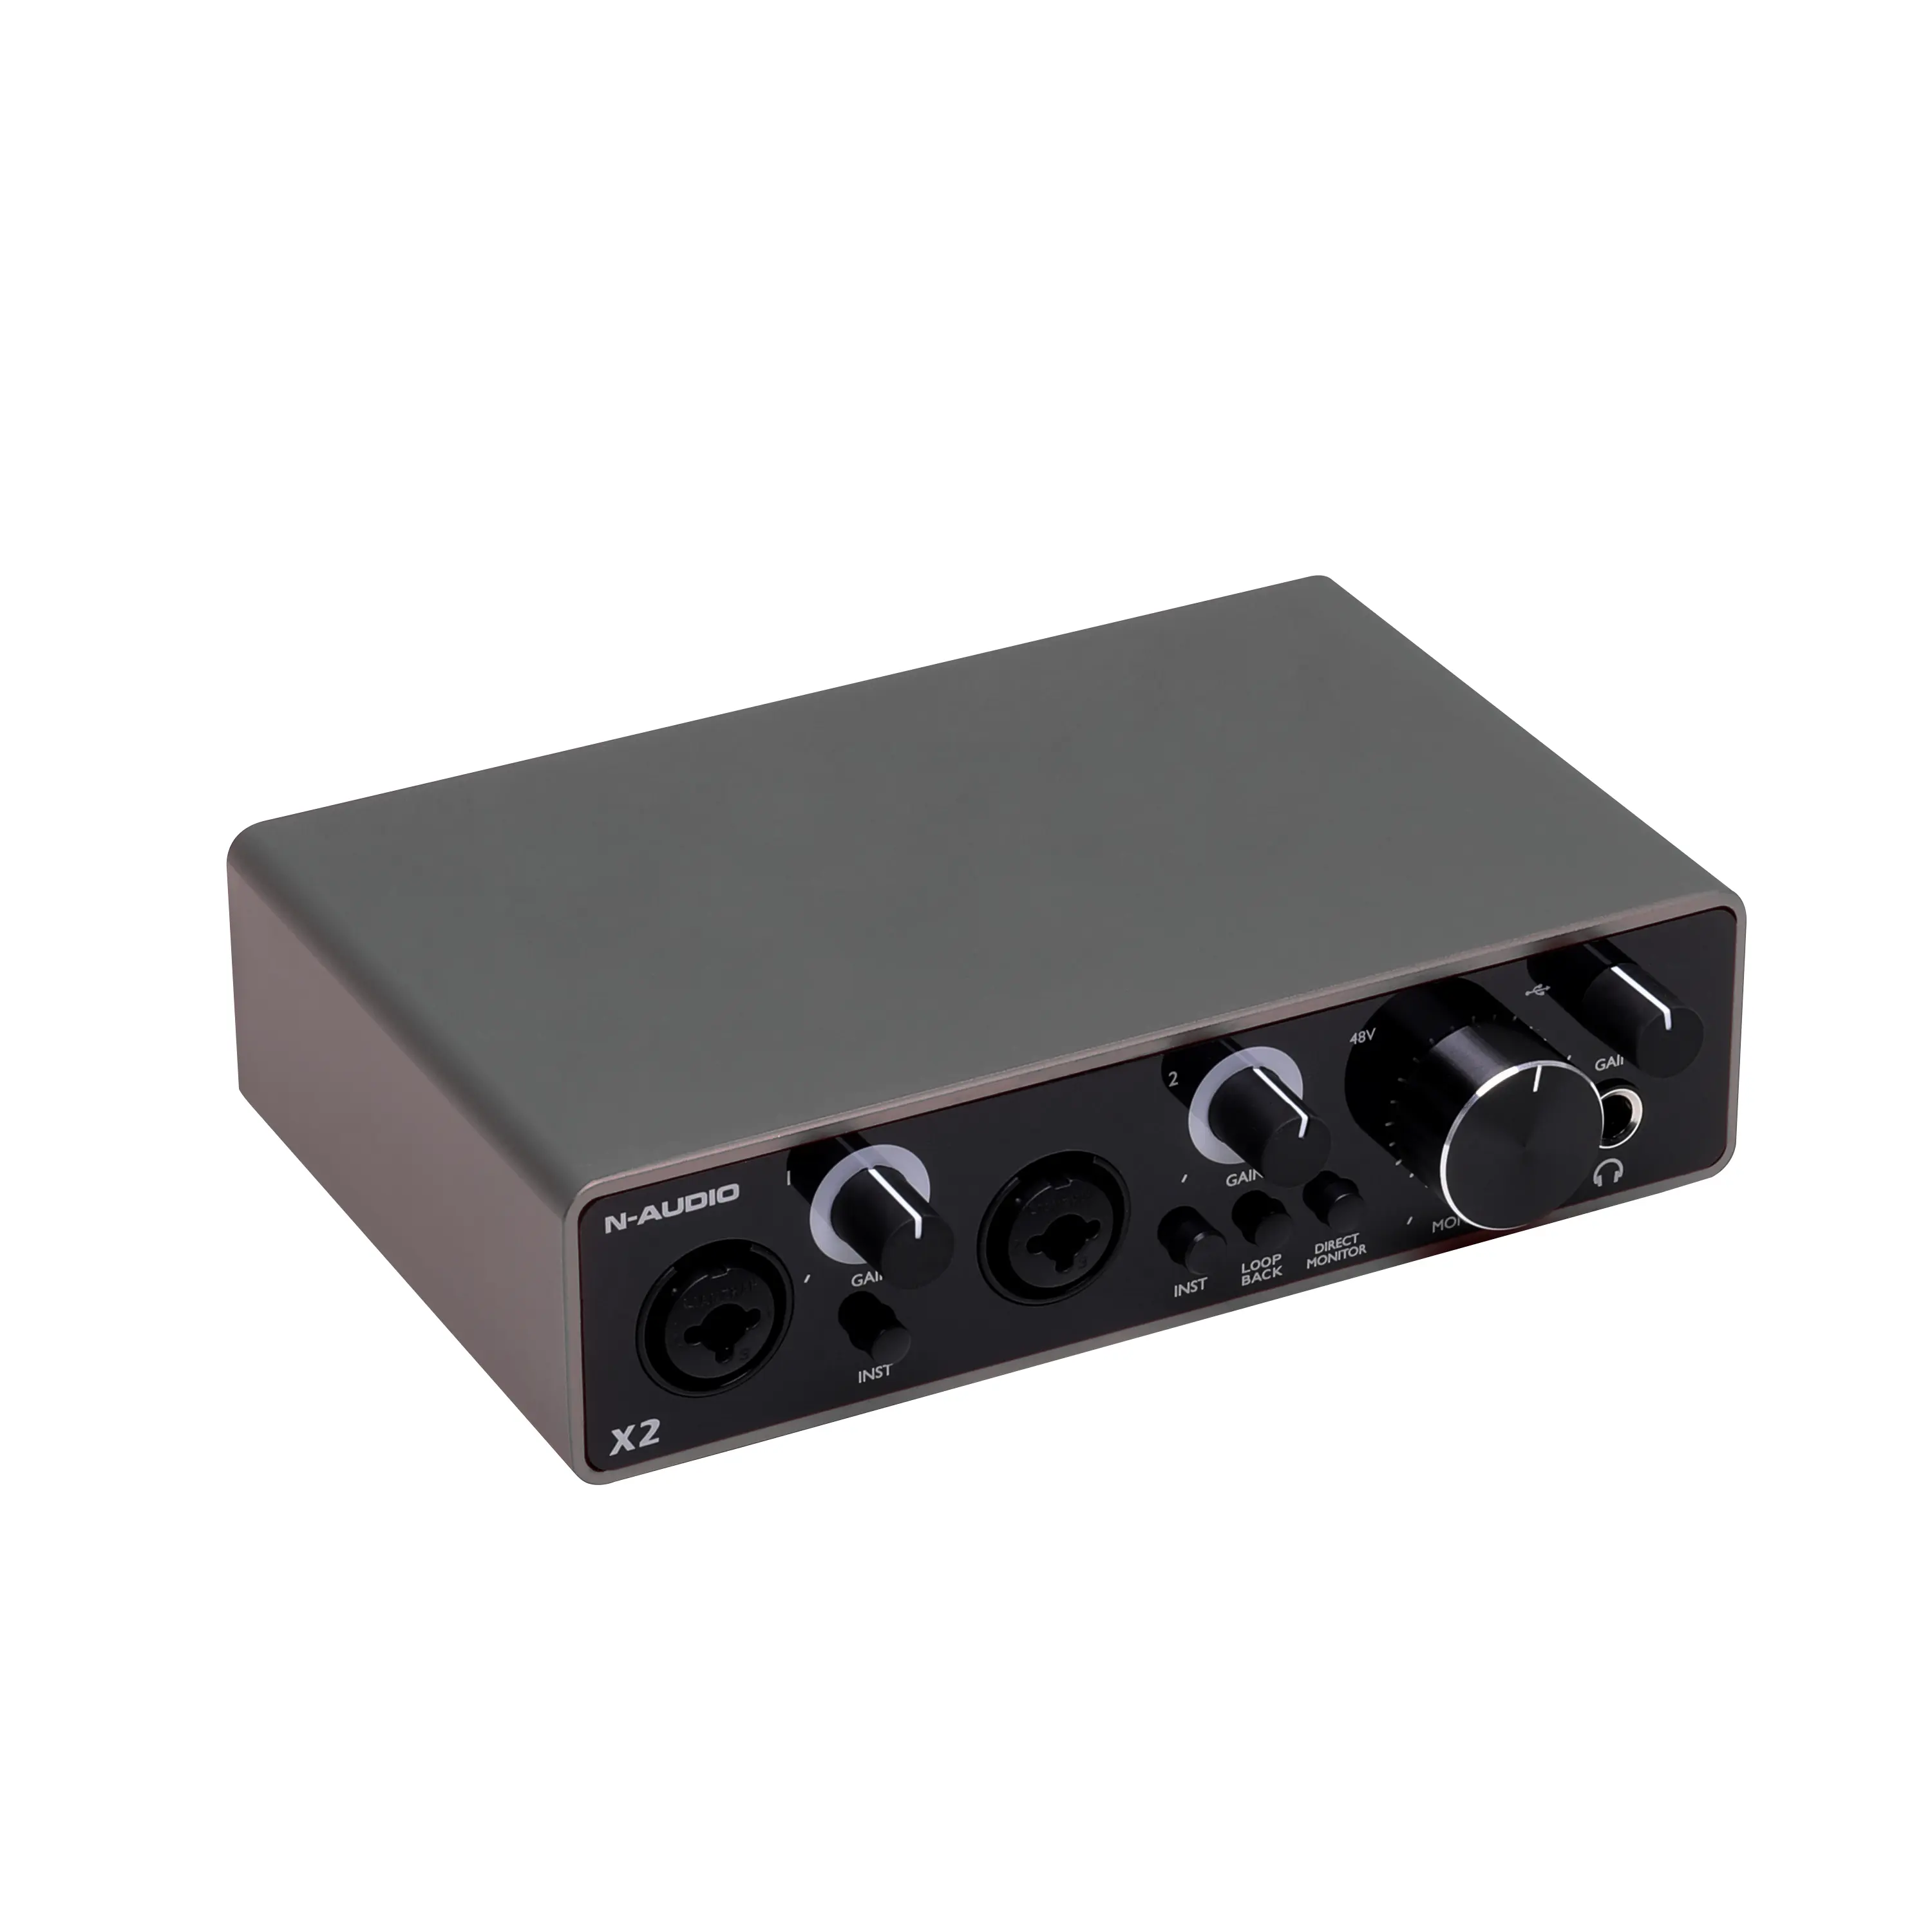 N-AUDIO X2 Audio Mixer Studio Portabel Usb Antarmuka Kartu Suara Profesional untuk Mikrofon 48V Rekaman Musik